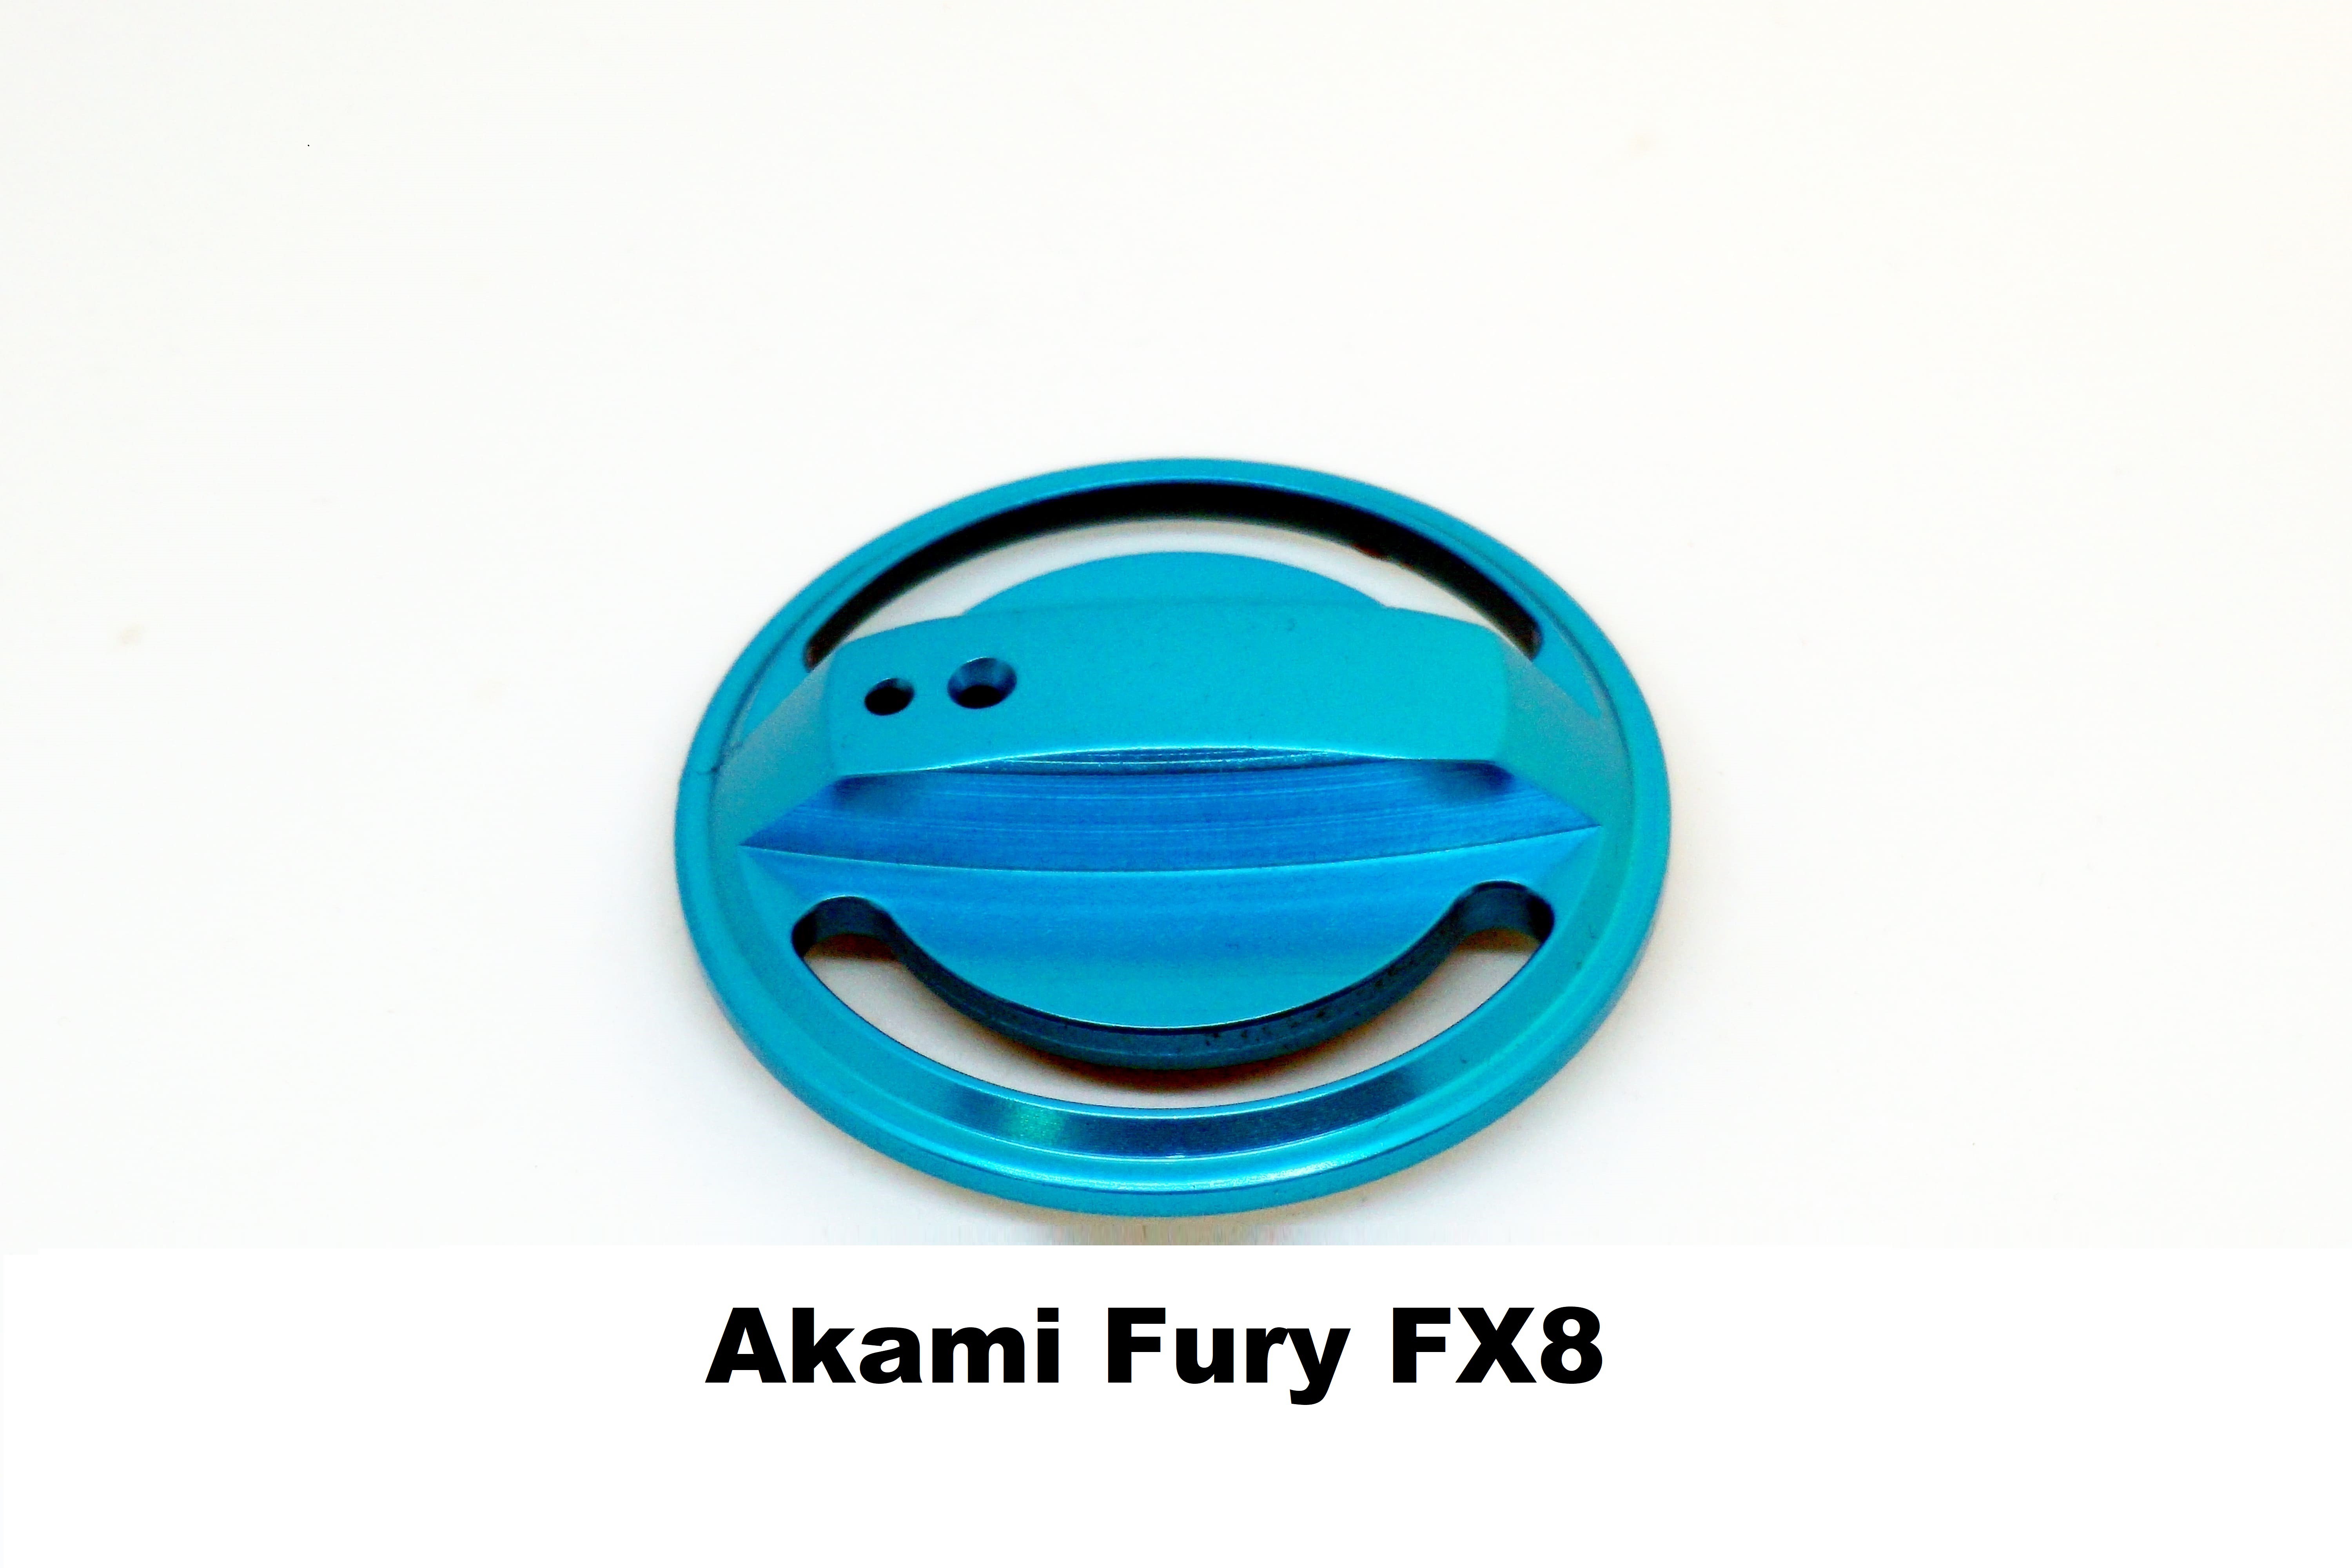 Drag Knob for Akami Fury FX8